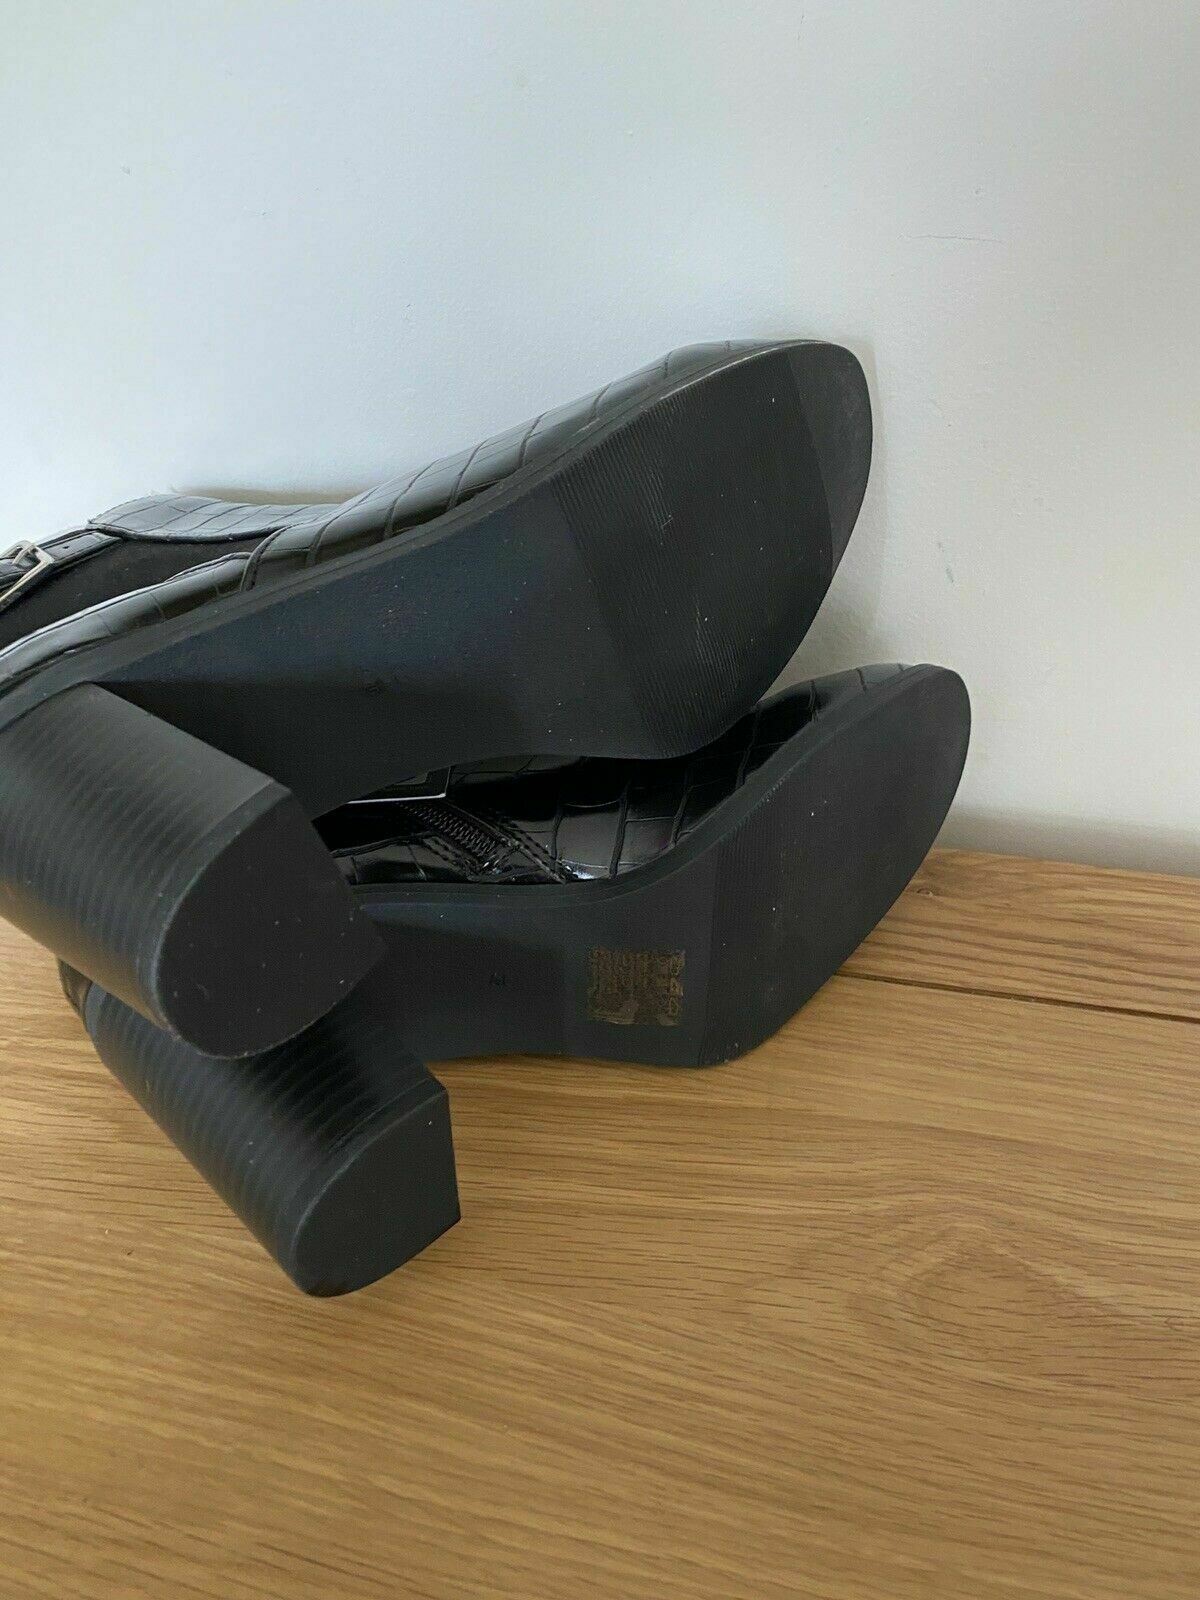 Principles Black Block Heel Boot Size 7 UK Patent Buckle Detail RRP £42